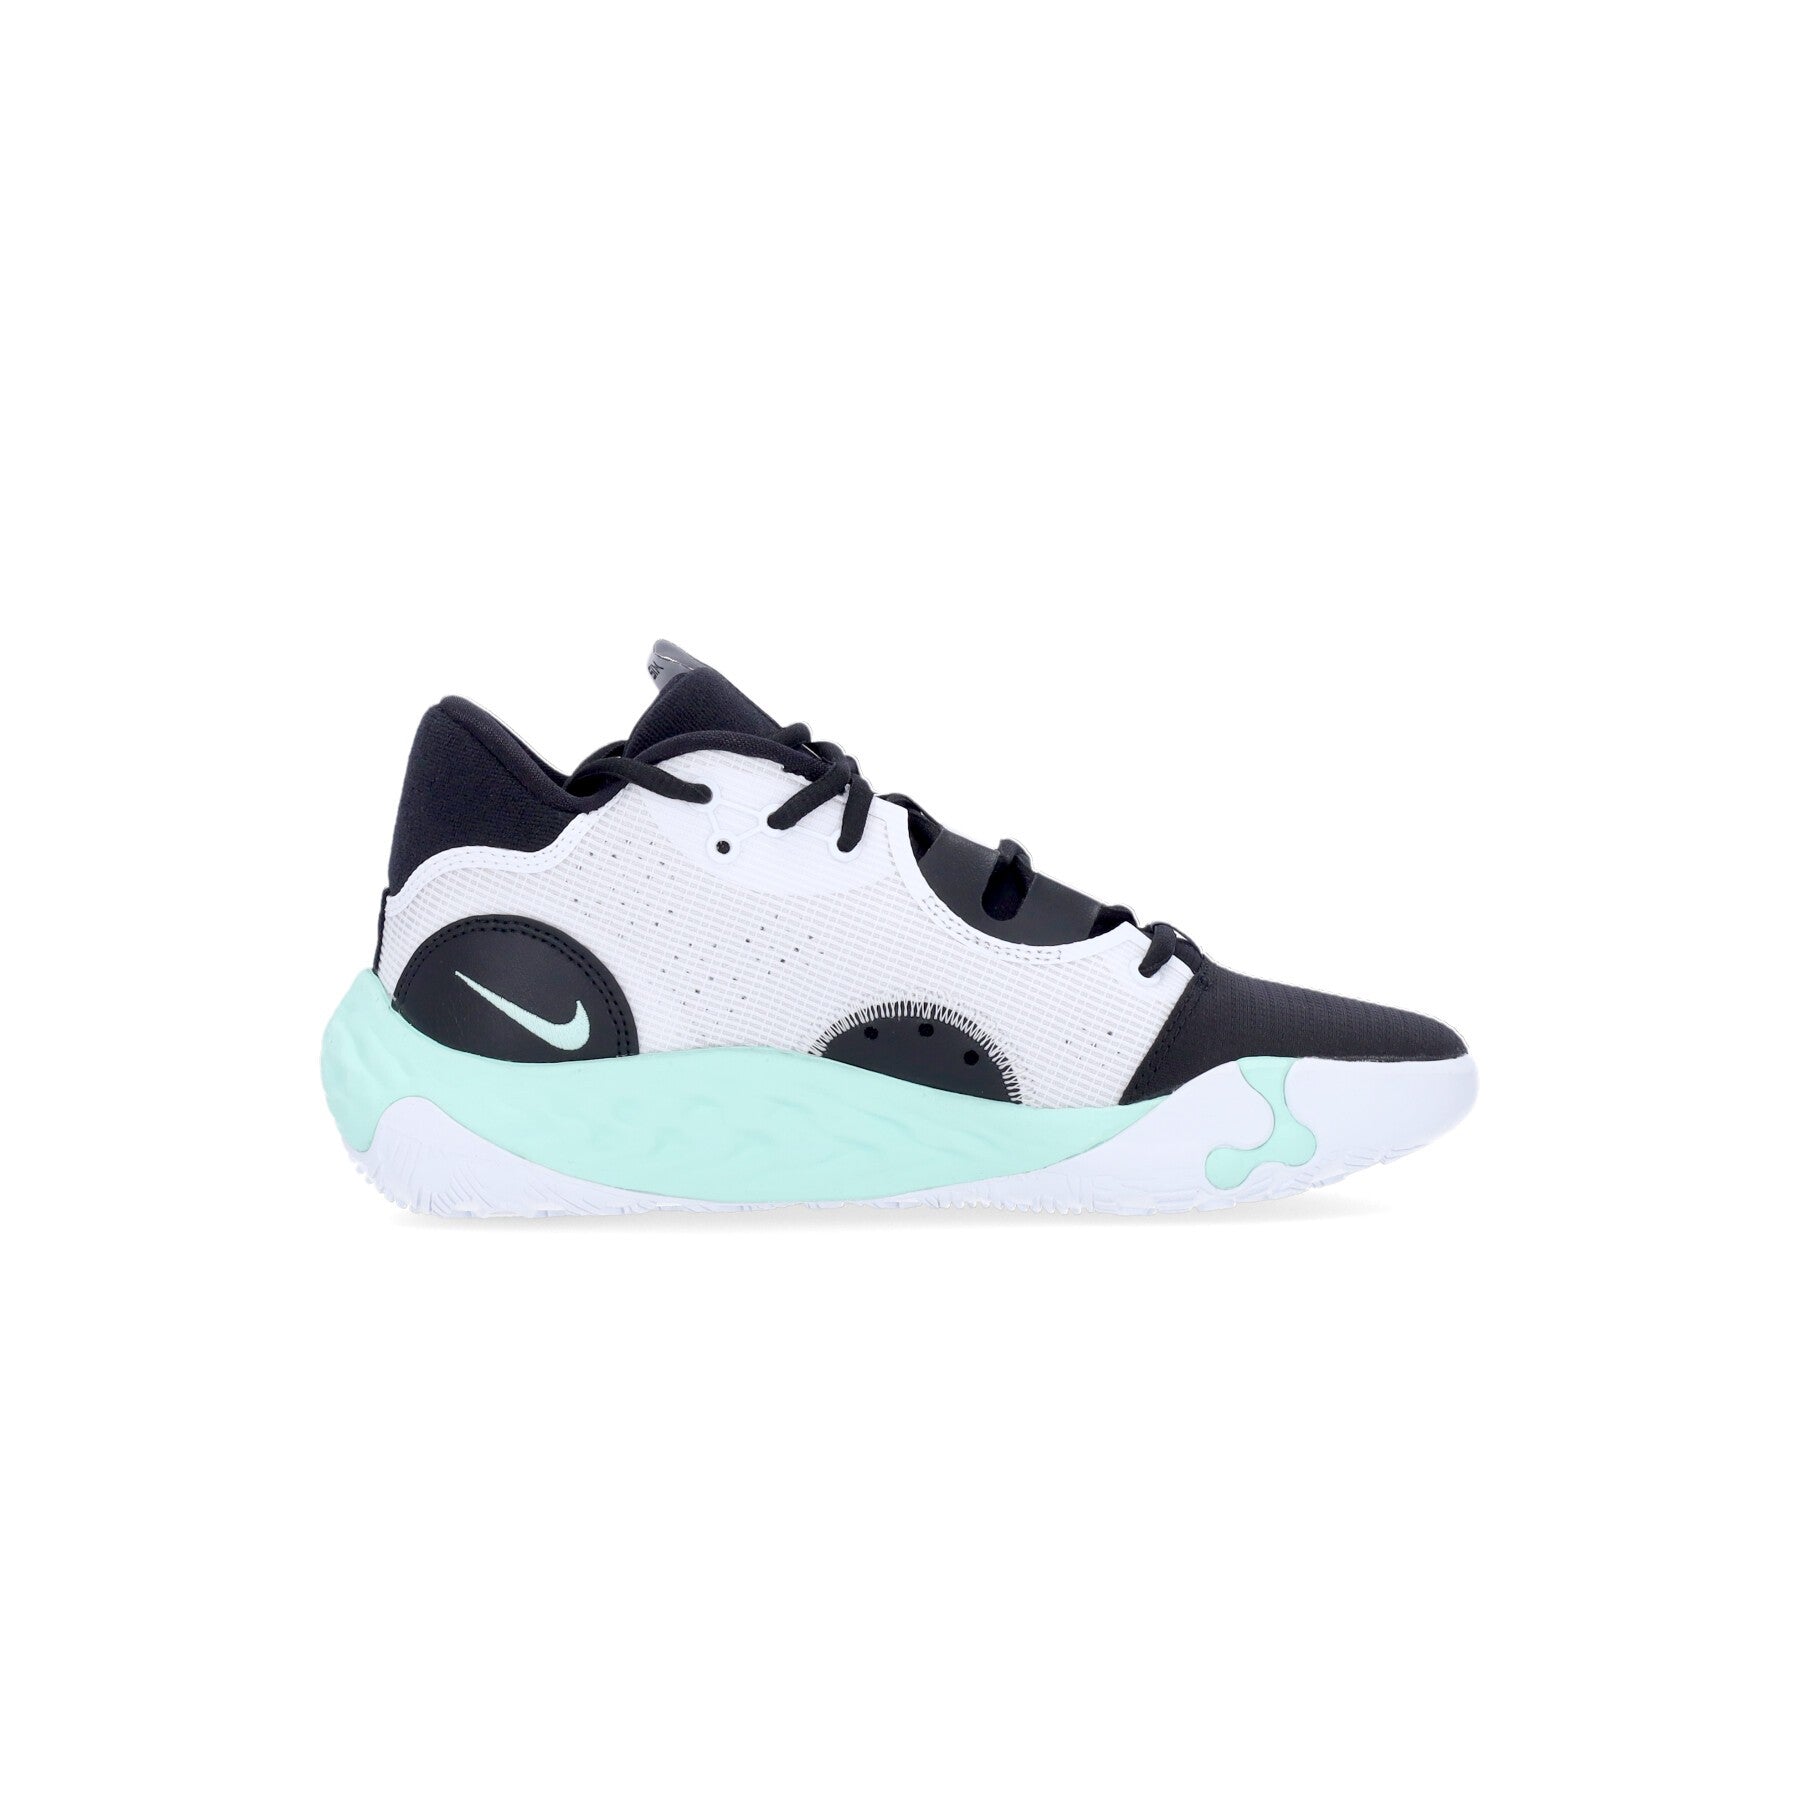 Men's Basketball Shoe Pg 6 Black/mint Foam/white